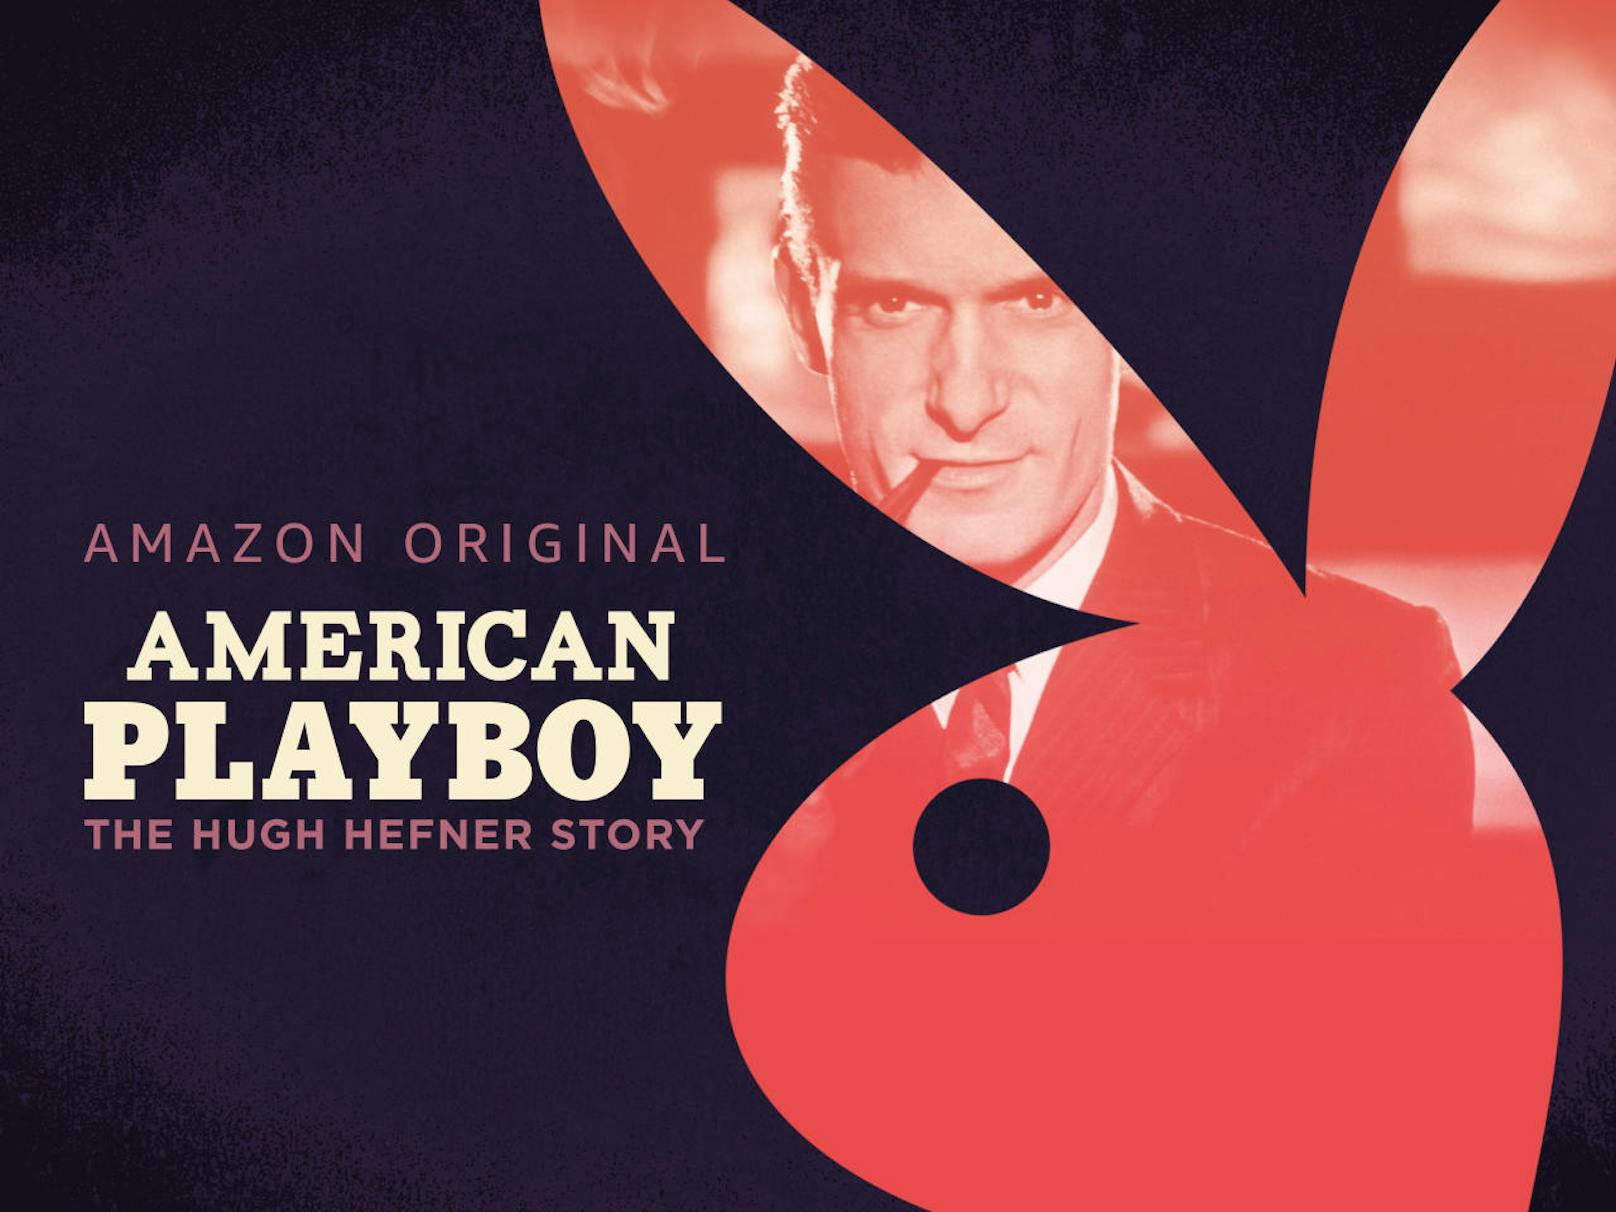 "American Playboy - The Hugh Hefner Story"